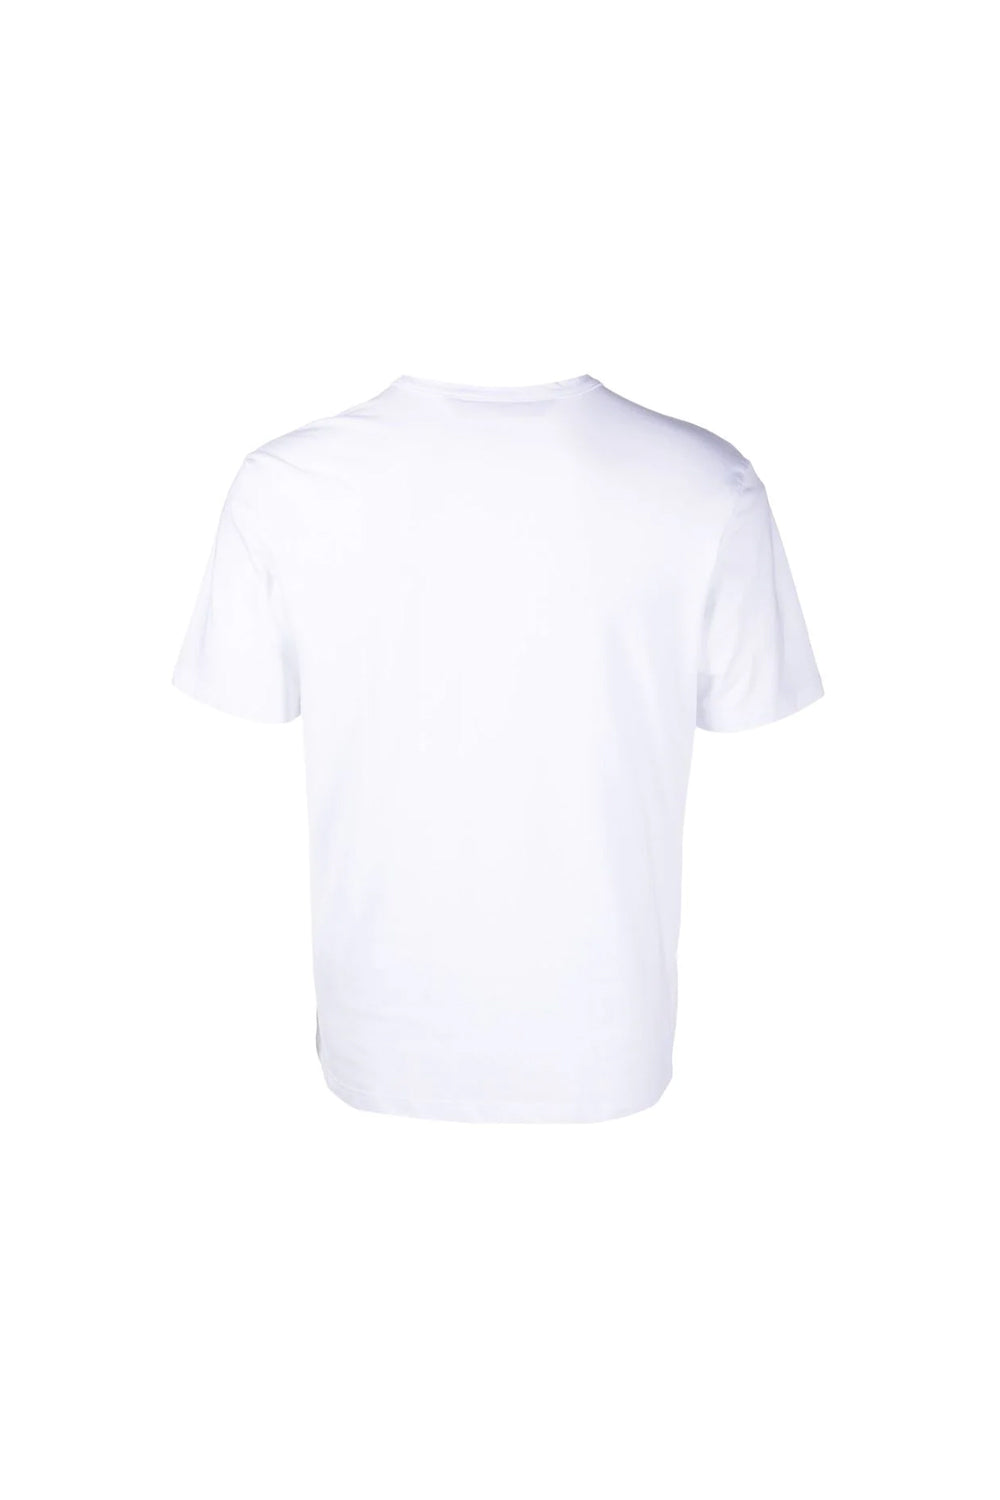 Palm Angels logo label T-shirt white